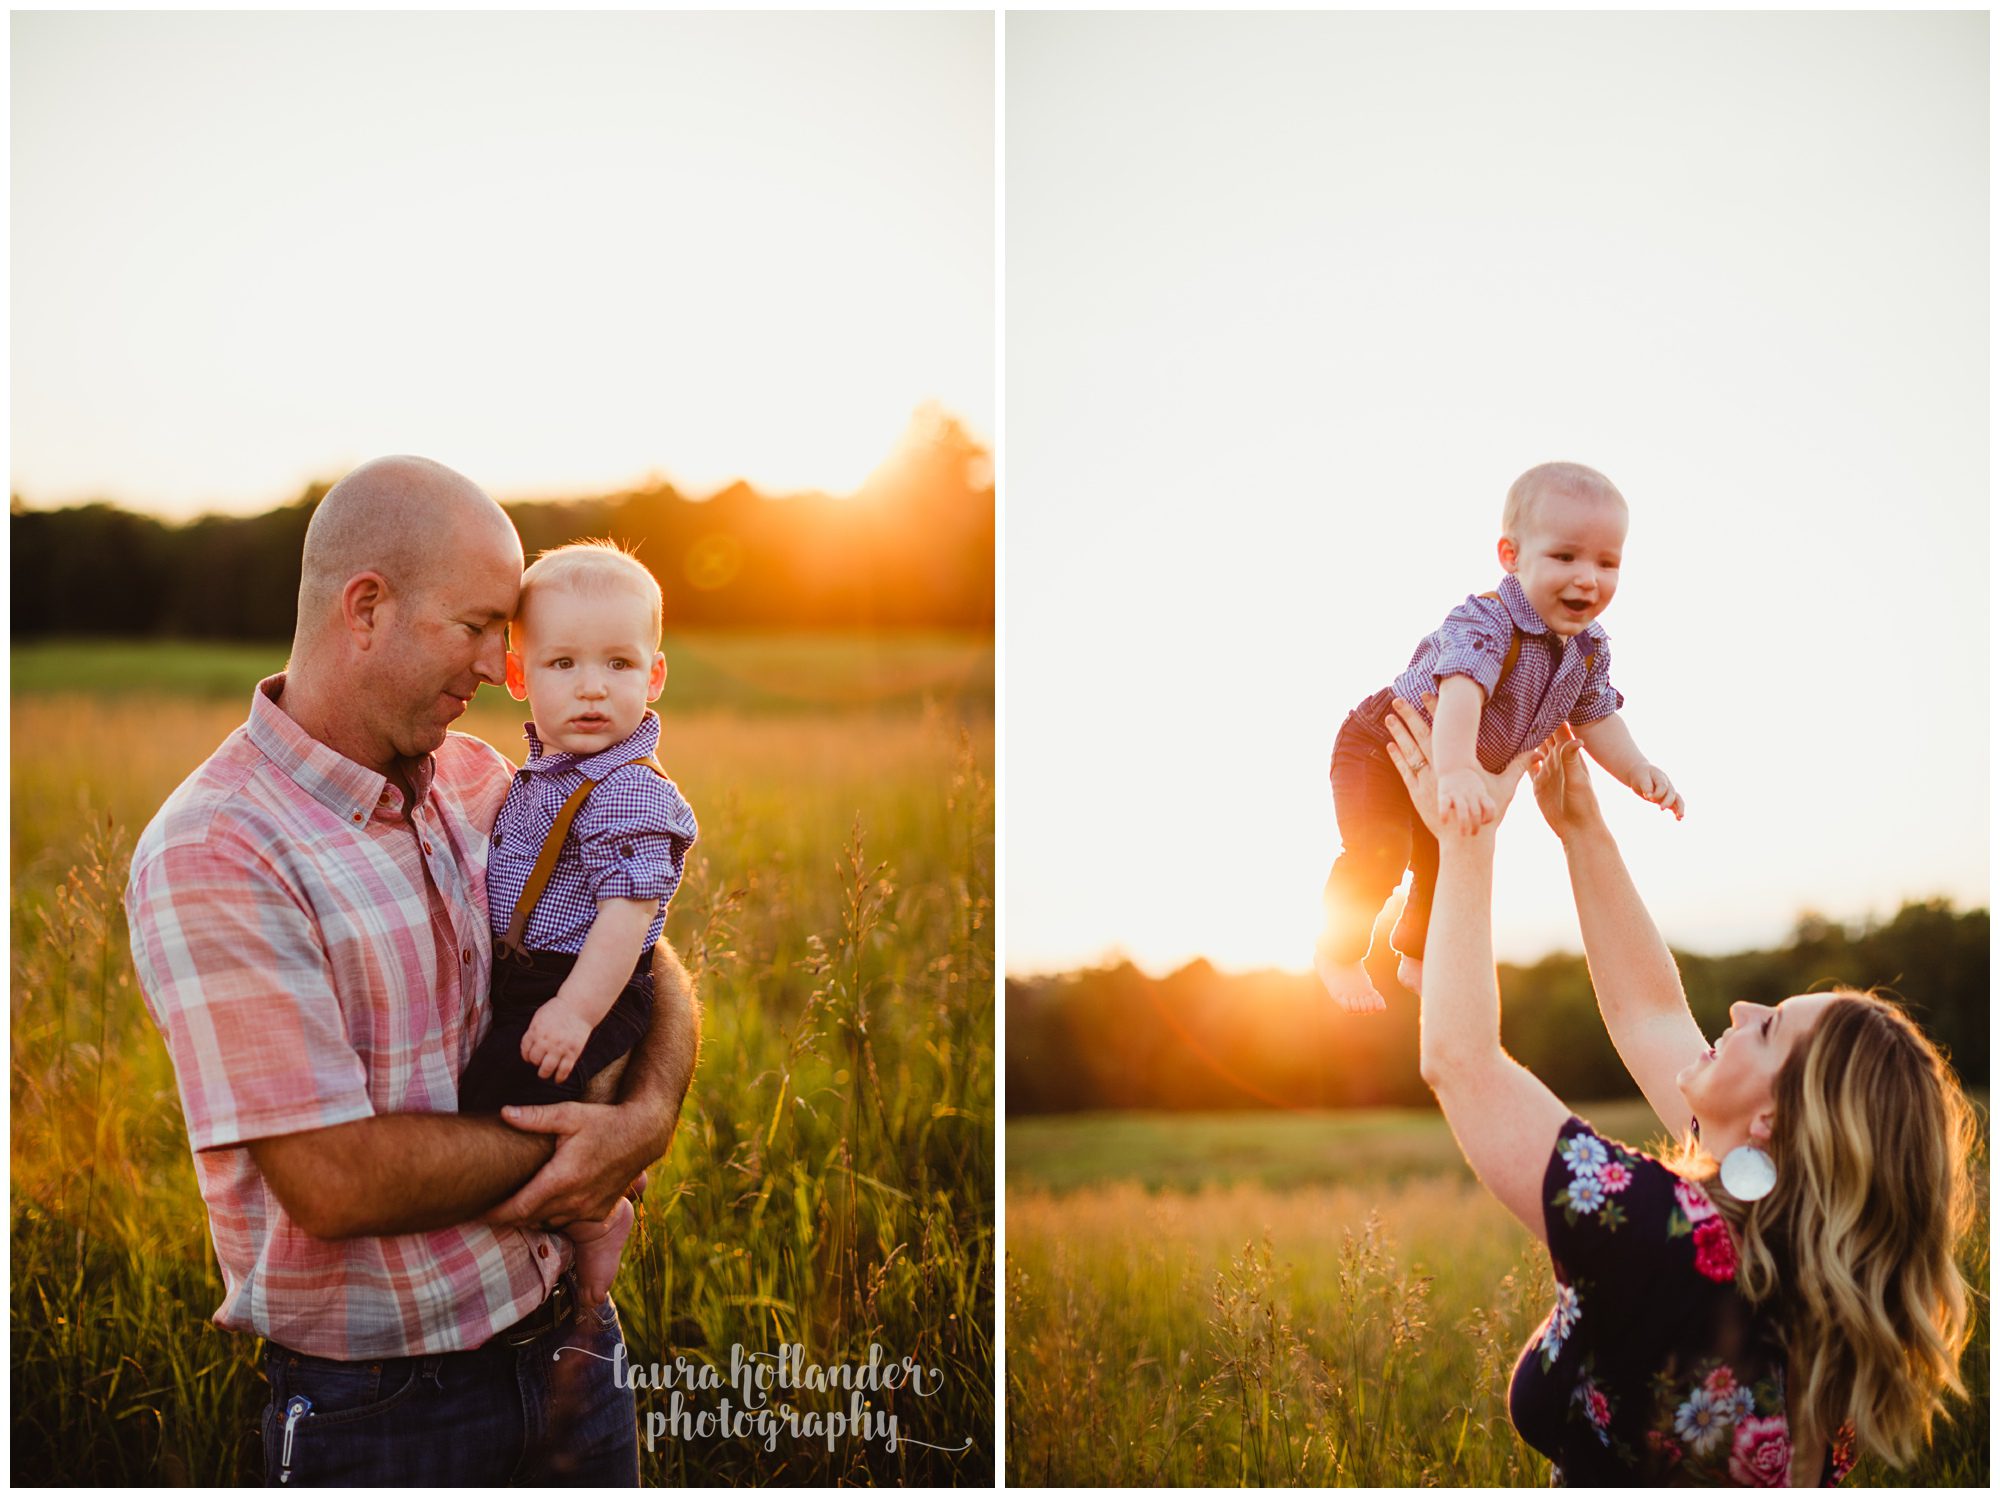 one year milestone, family portraits in a field, Laura Hollander Photography, Battle Creek, MI